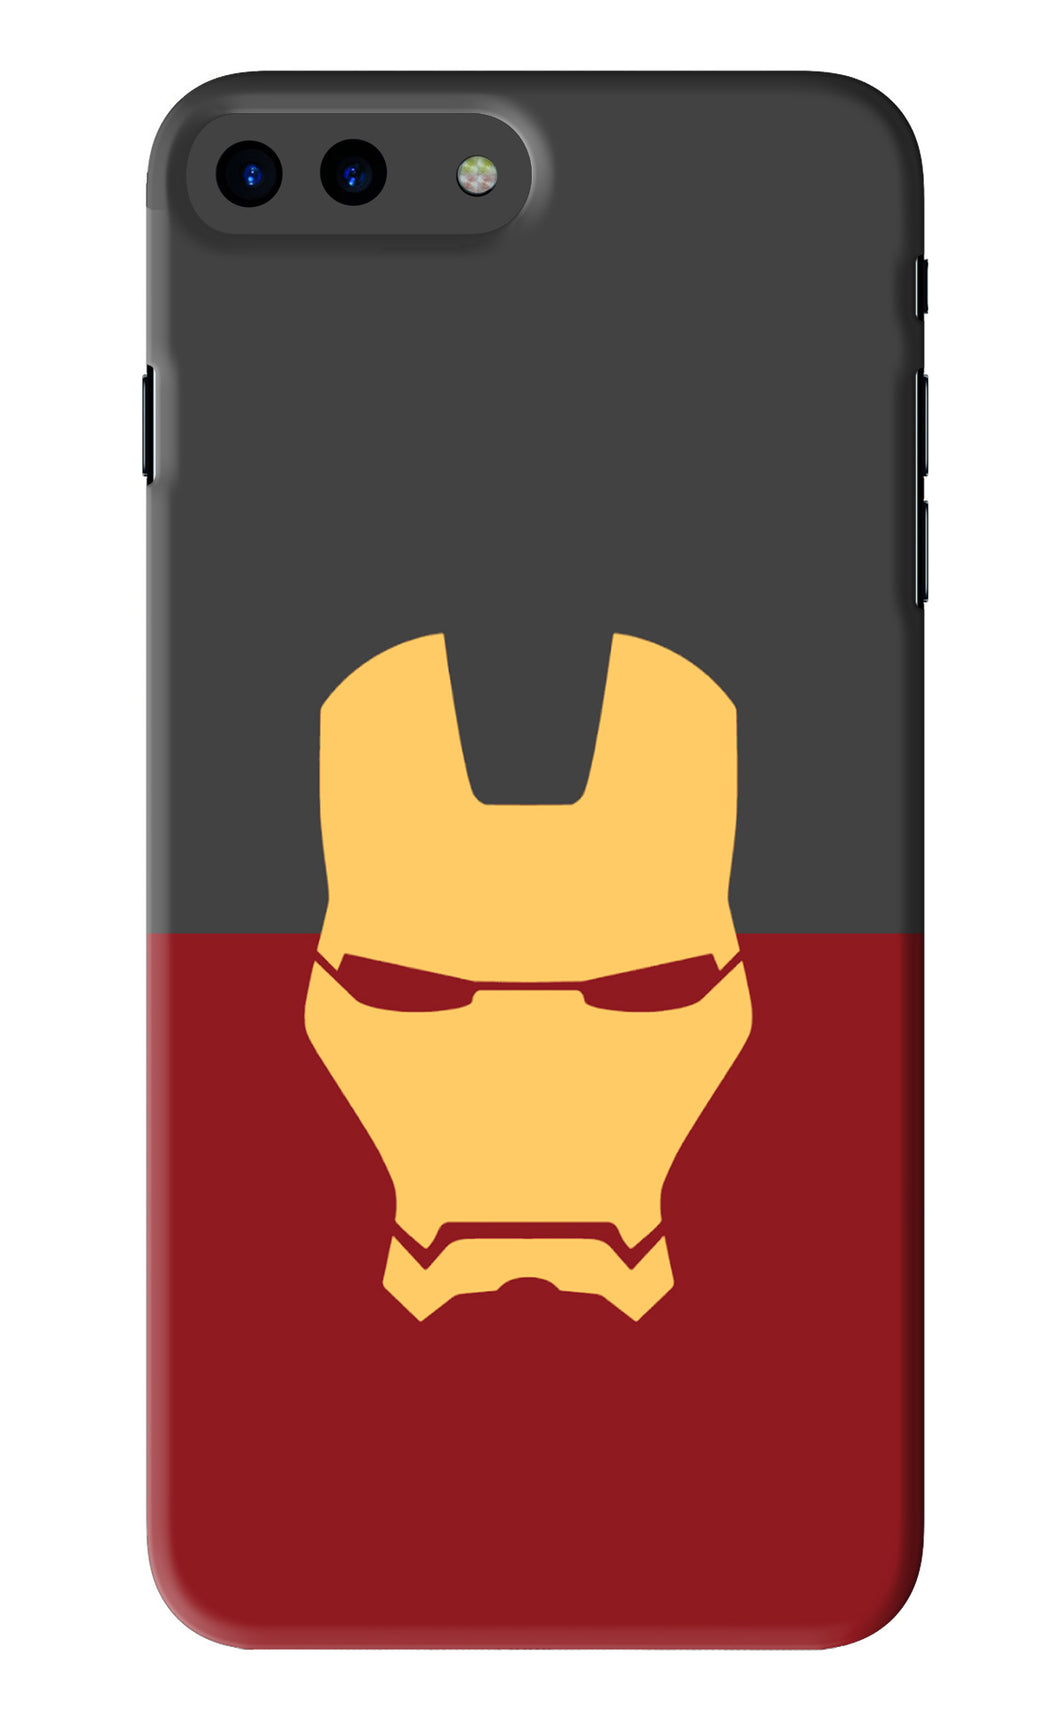 Ironman iPhone 7 Plus Back Skin Wrap